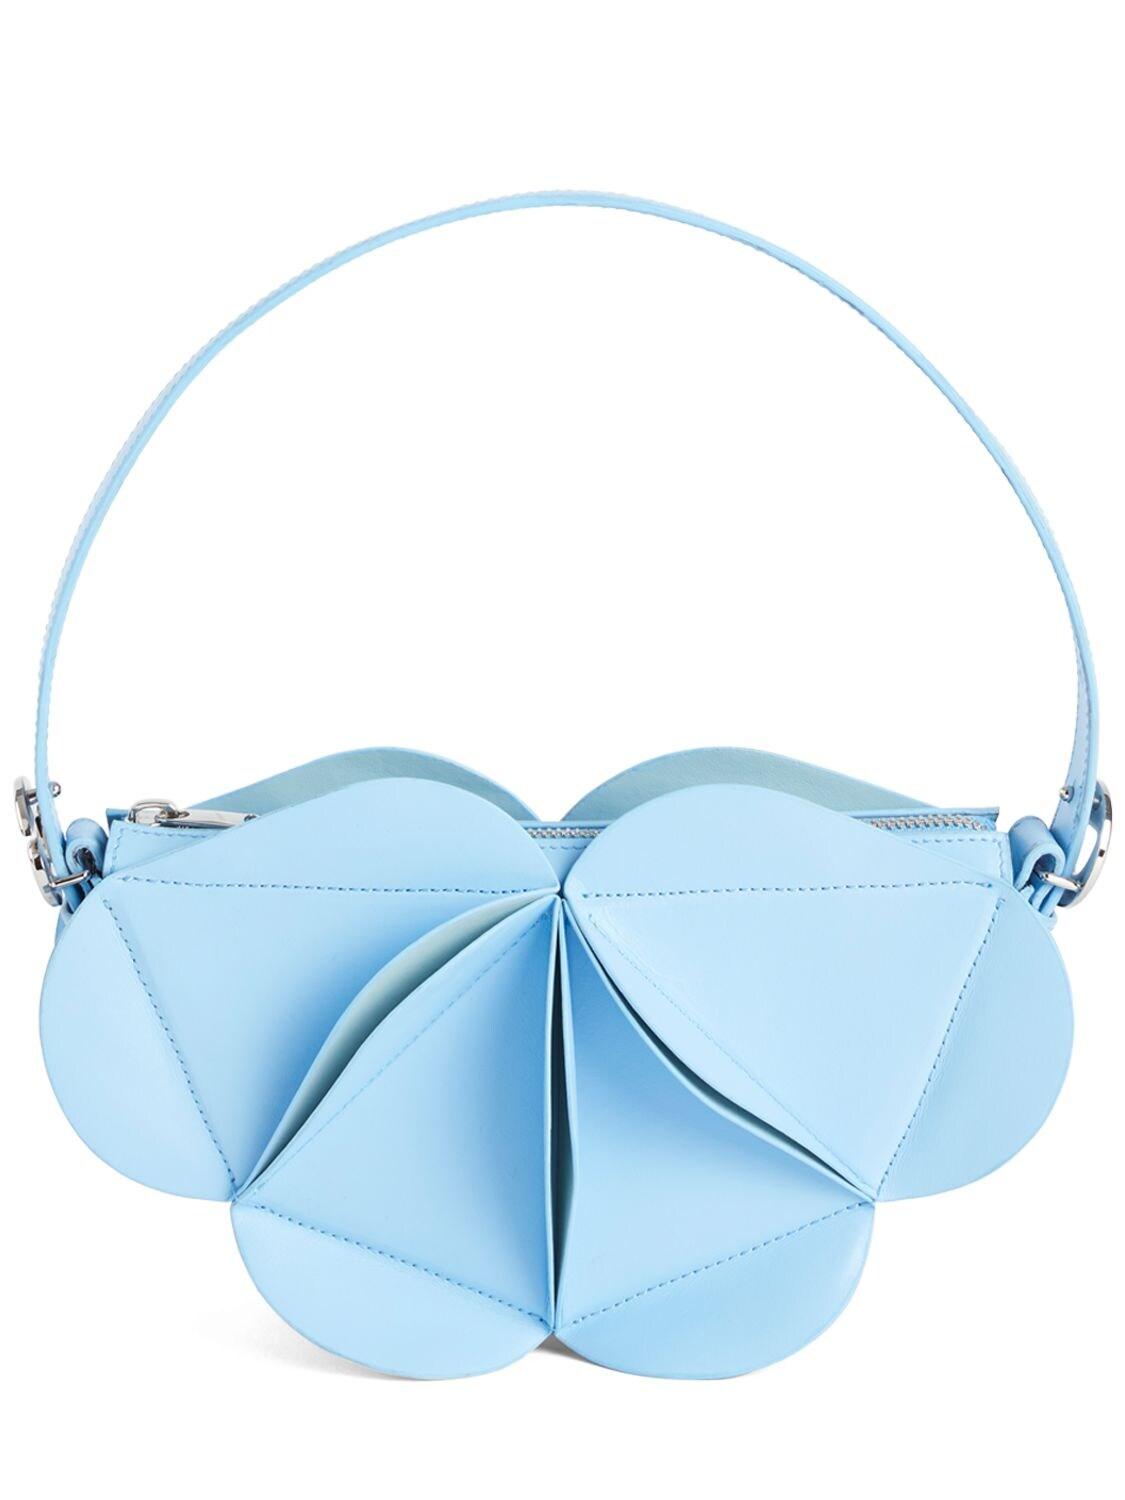 Coperni Origami Leather Top Handle Bag in Blue | Lyst UK